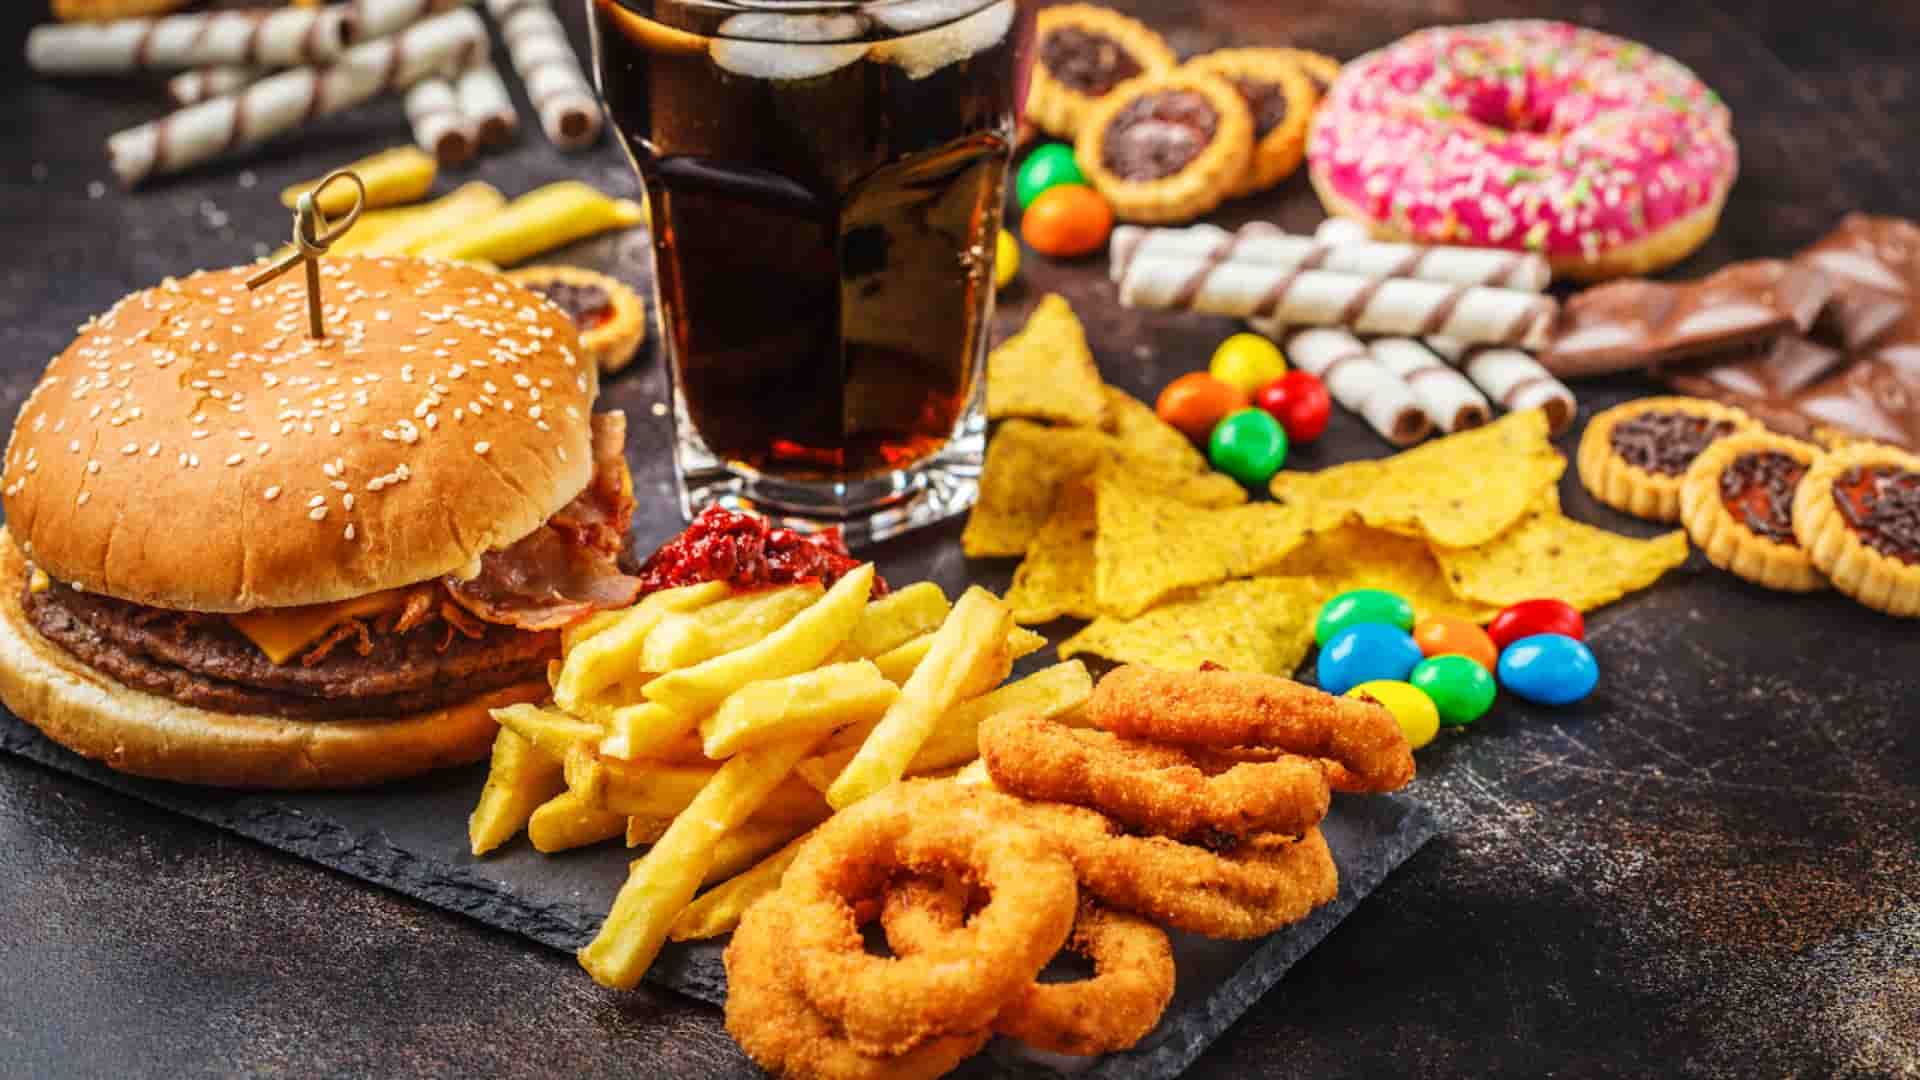 Berbagai junk foods seperti hamburger, french fries, onion ring, donat, dan cola